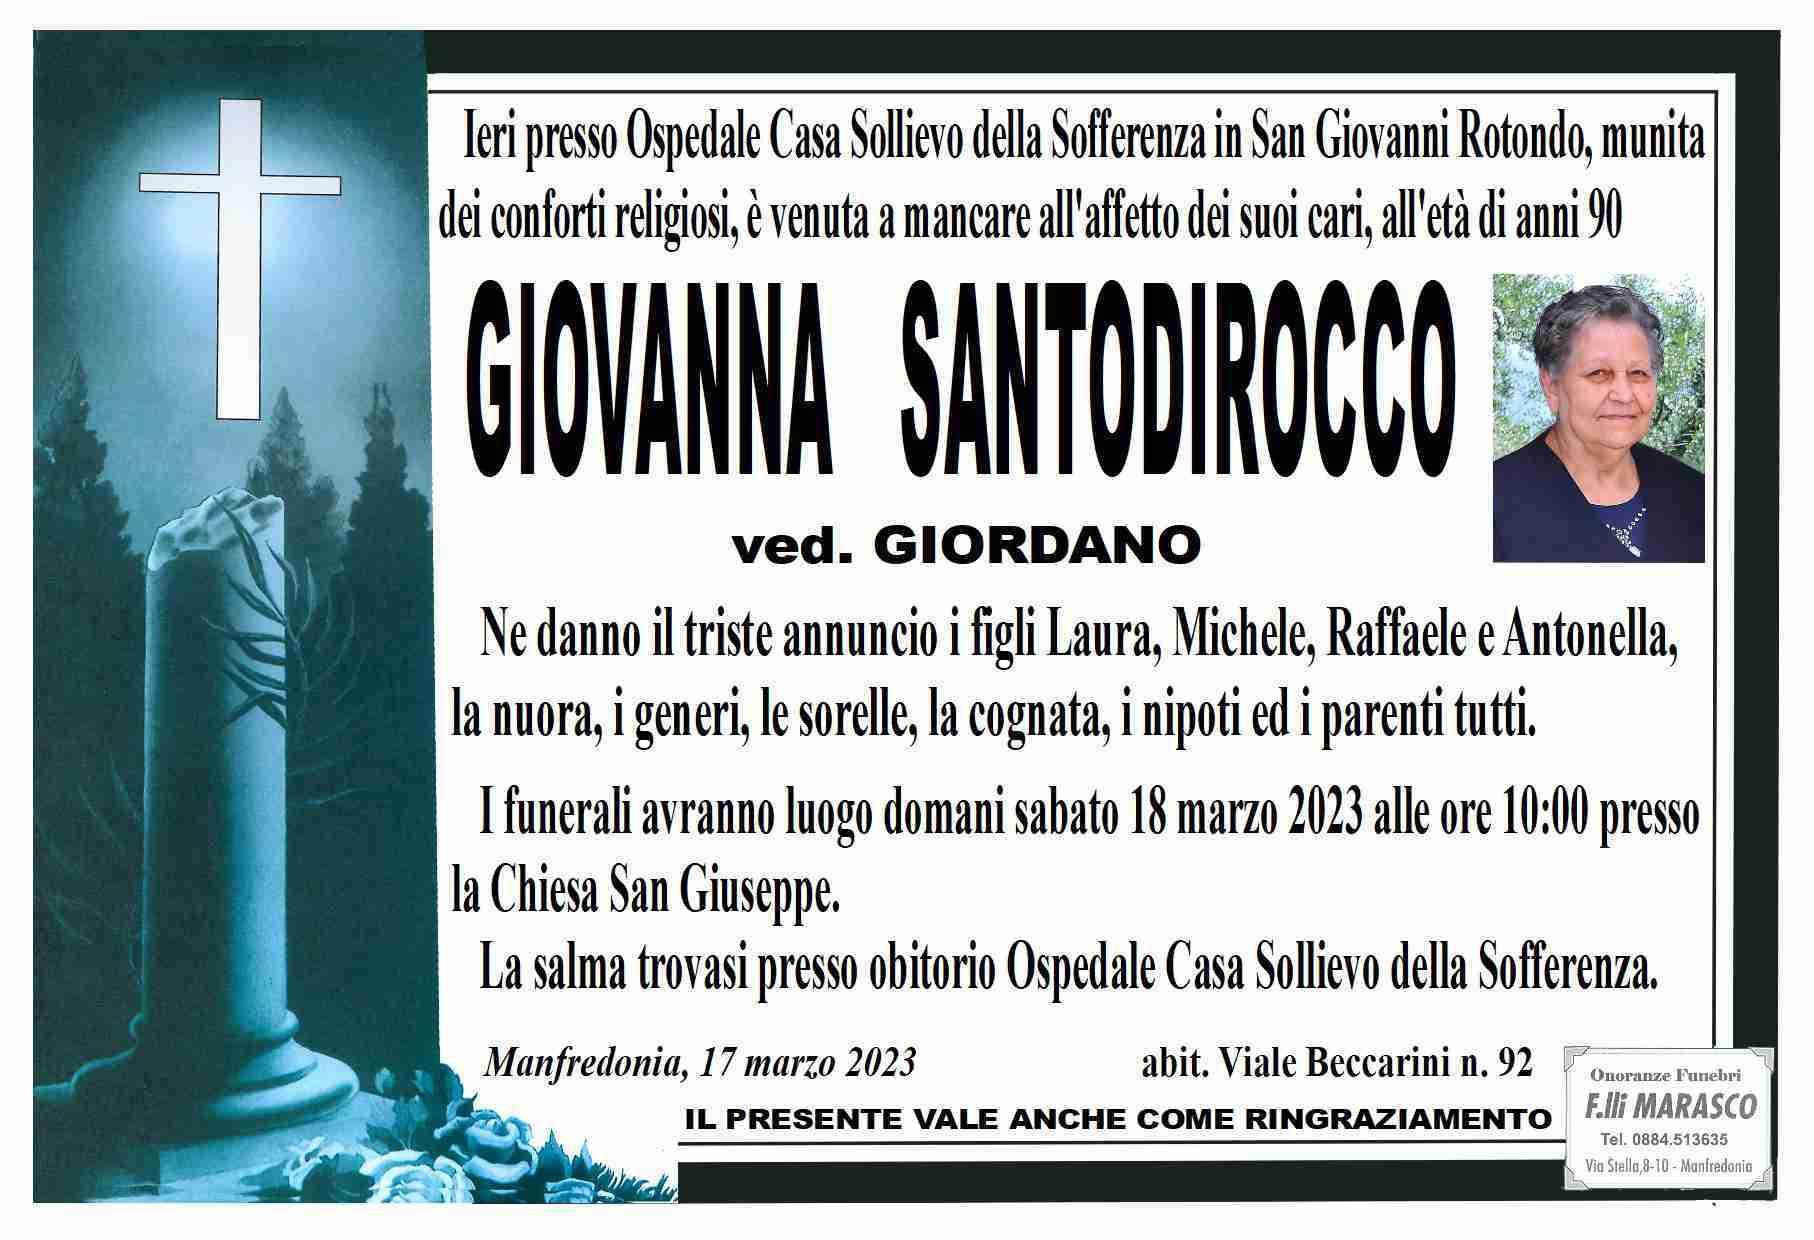 Giovanna Santodirocco